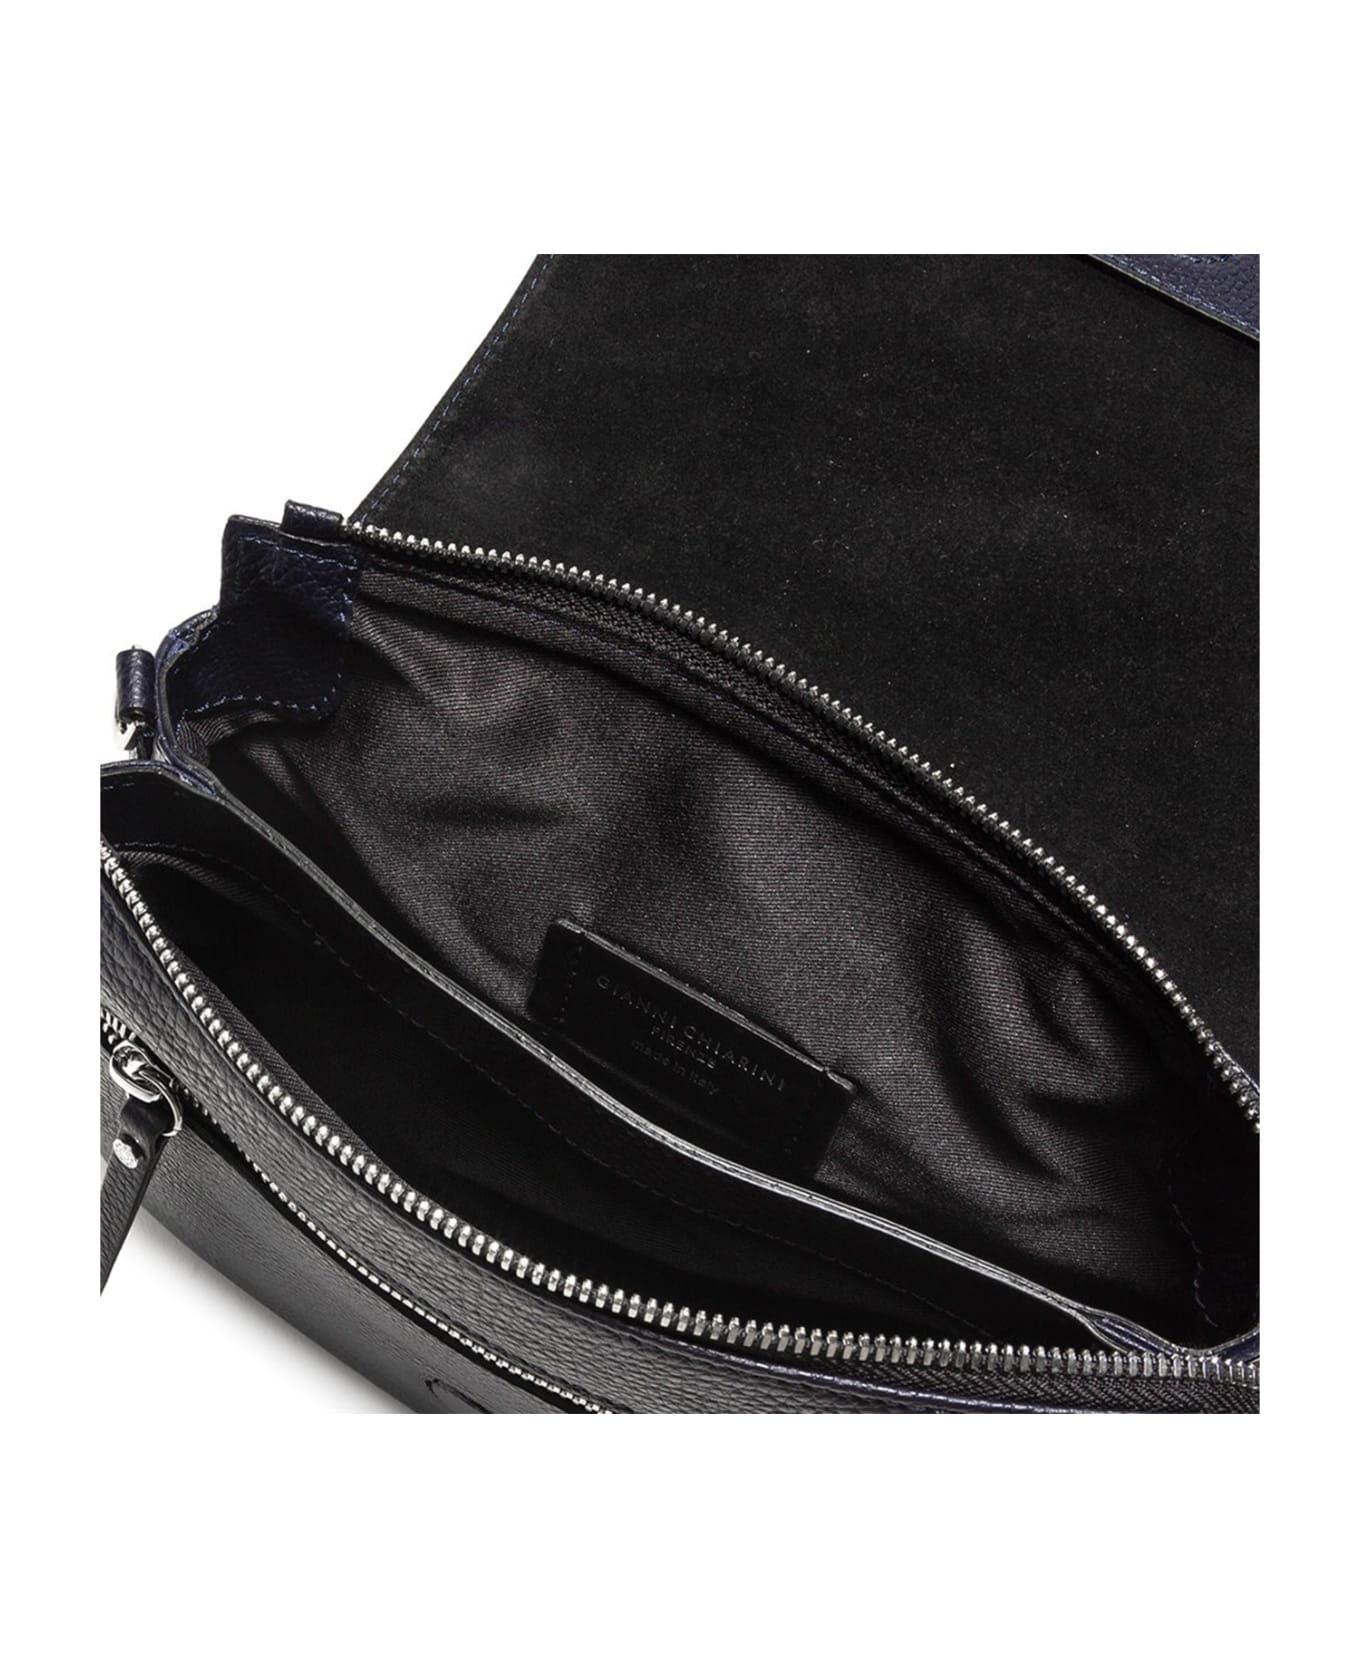 Gianni Chiarini Three Navy Blue Leather Shoulder Bag - NAVY